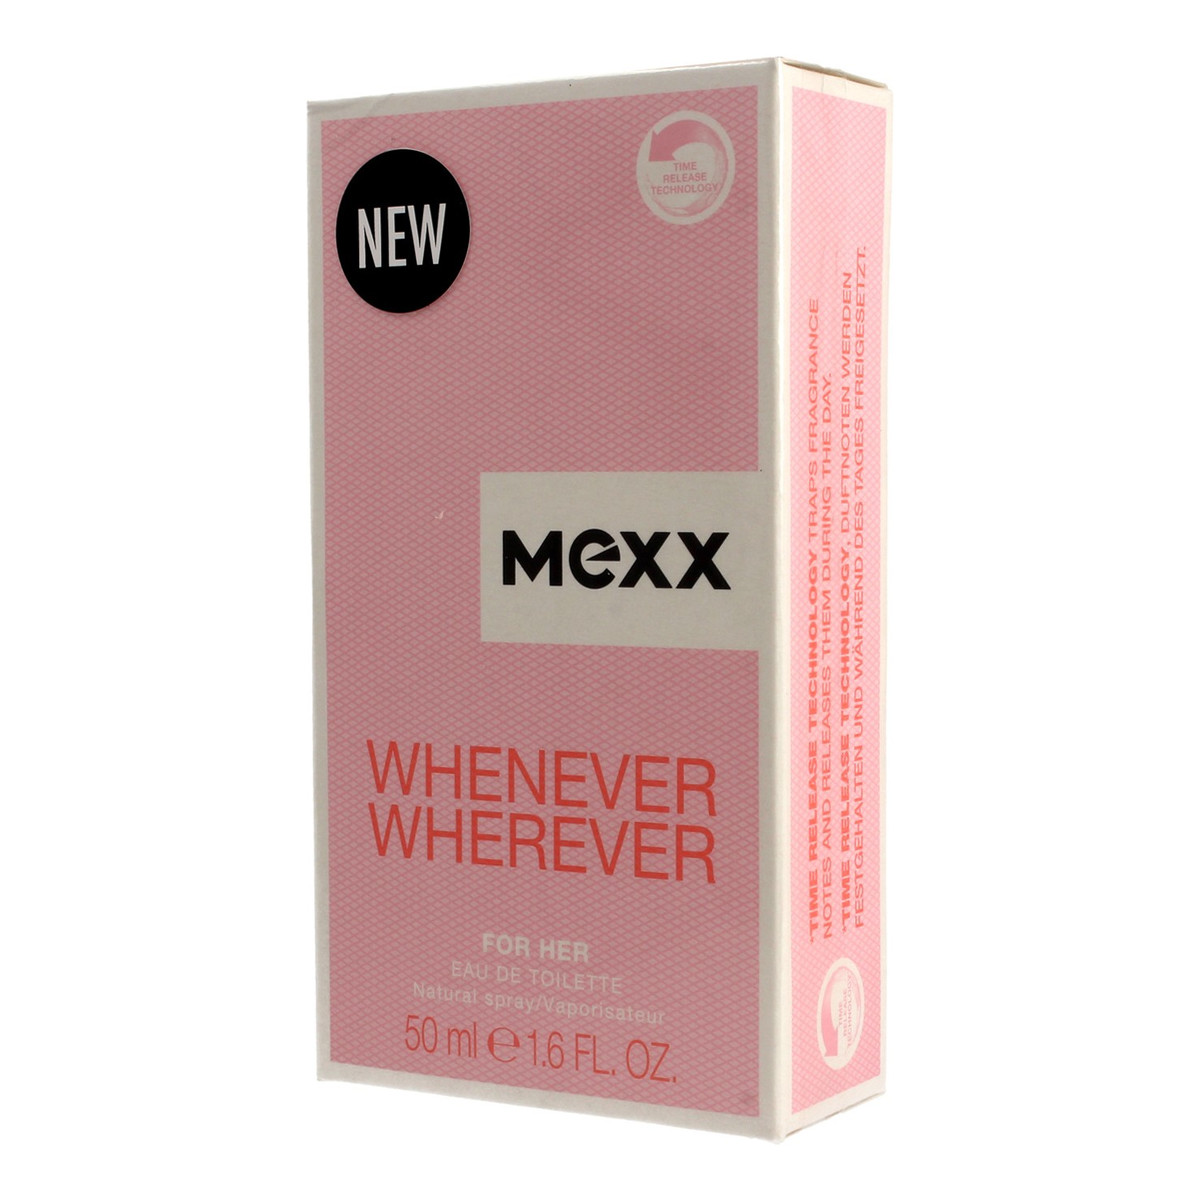 Mexx Whenever Wherever for Her Woda toaletowa 50ml